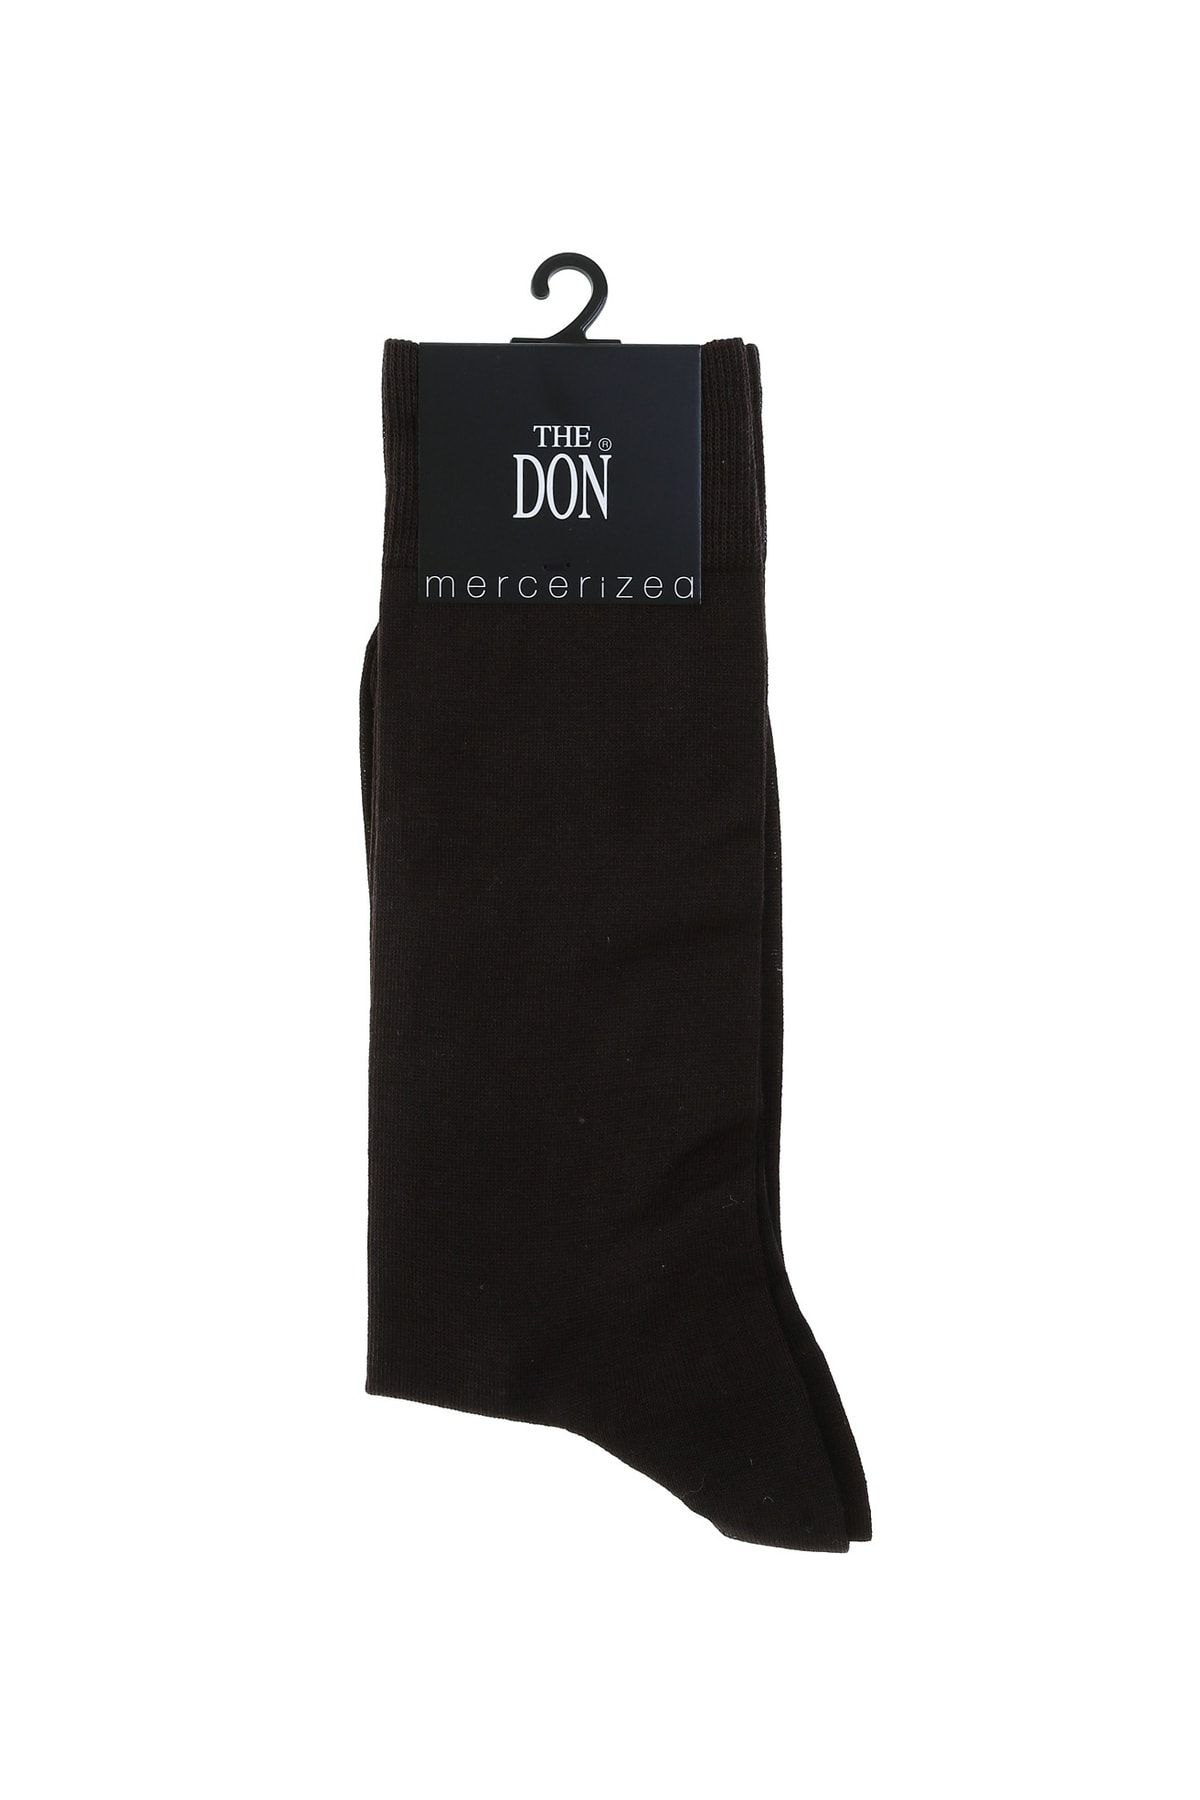 TheDon The Don Erkek Kahverengi Çorap